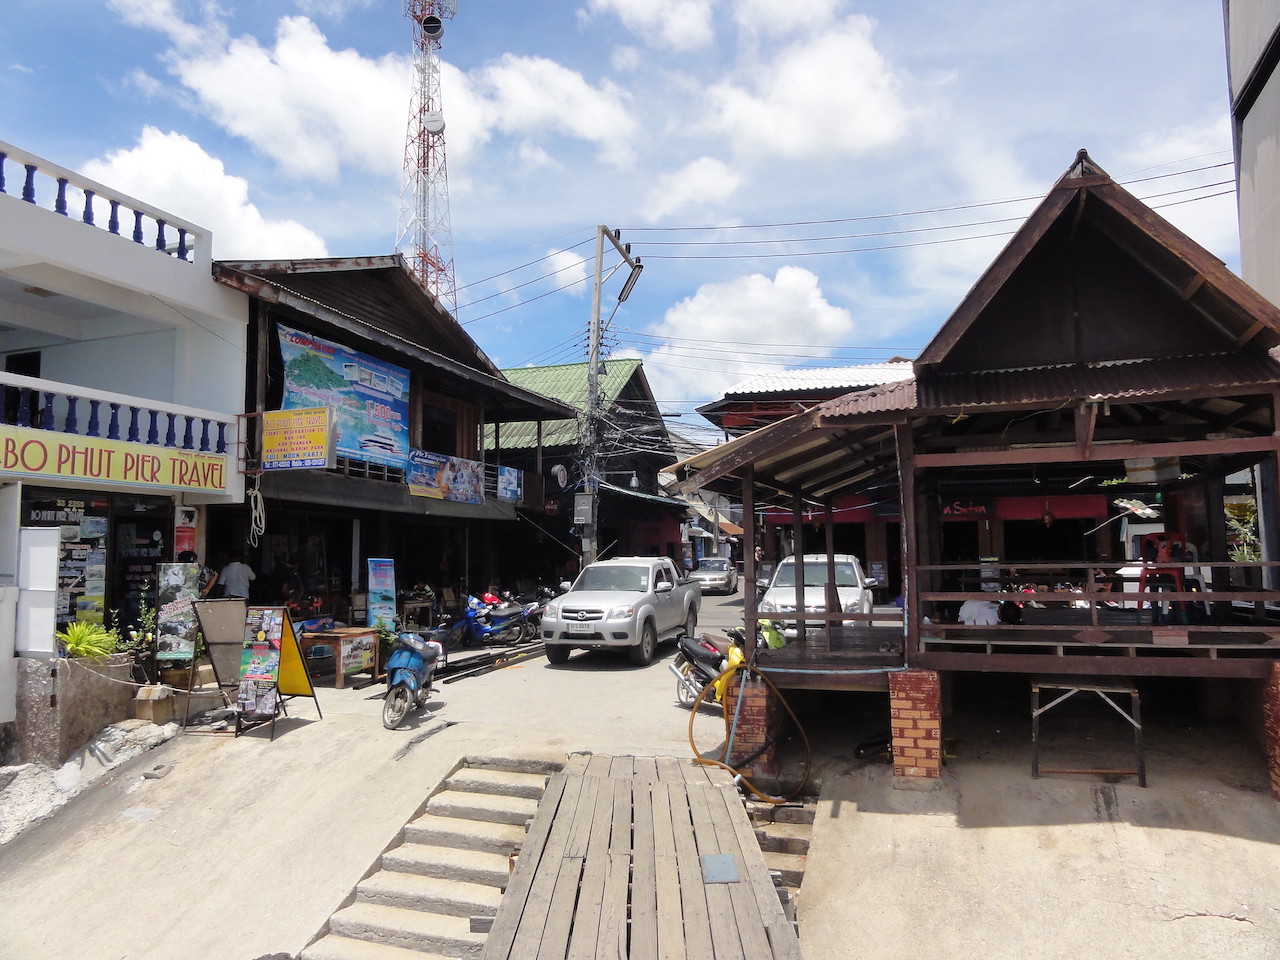 Bophut Fisherman's Village in Koh Samui.